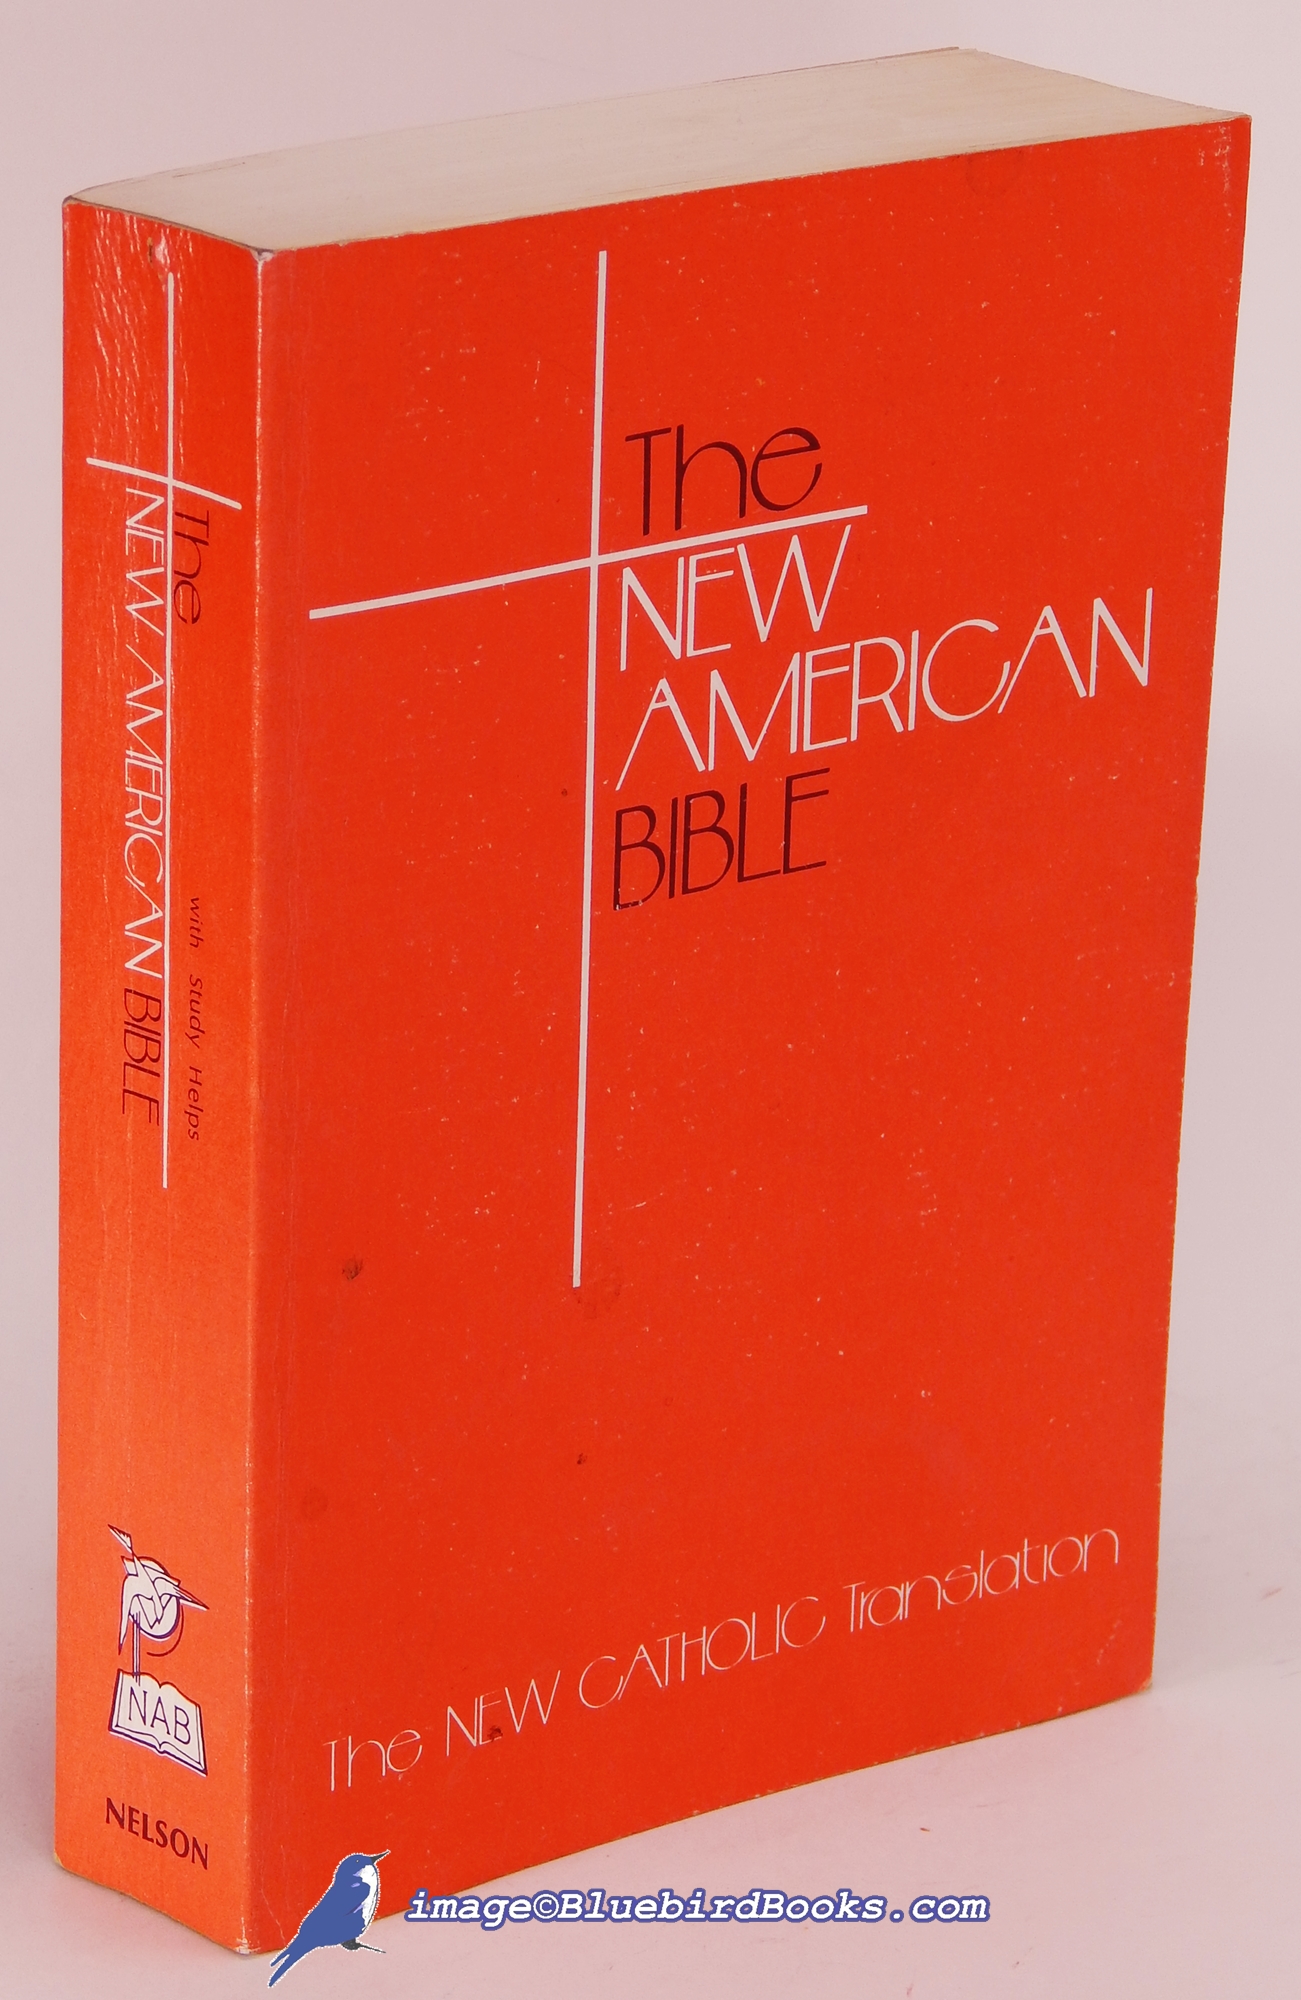 BRODERICK, ROBERT C. (GENERAL EDITOR) - The New American Bible: The New Catholic Translation